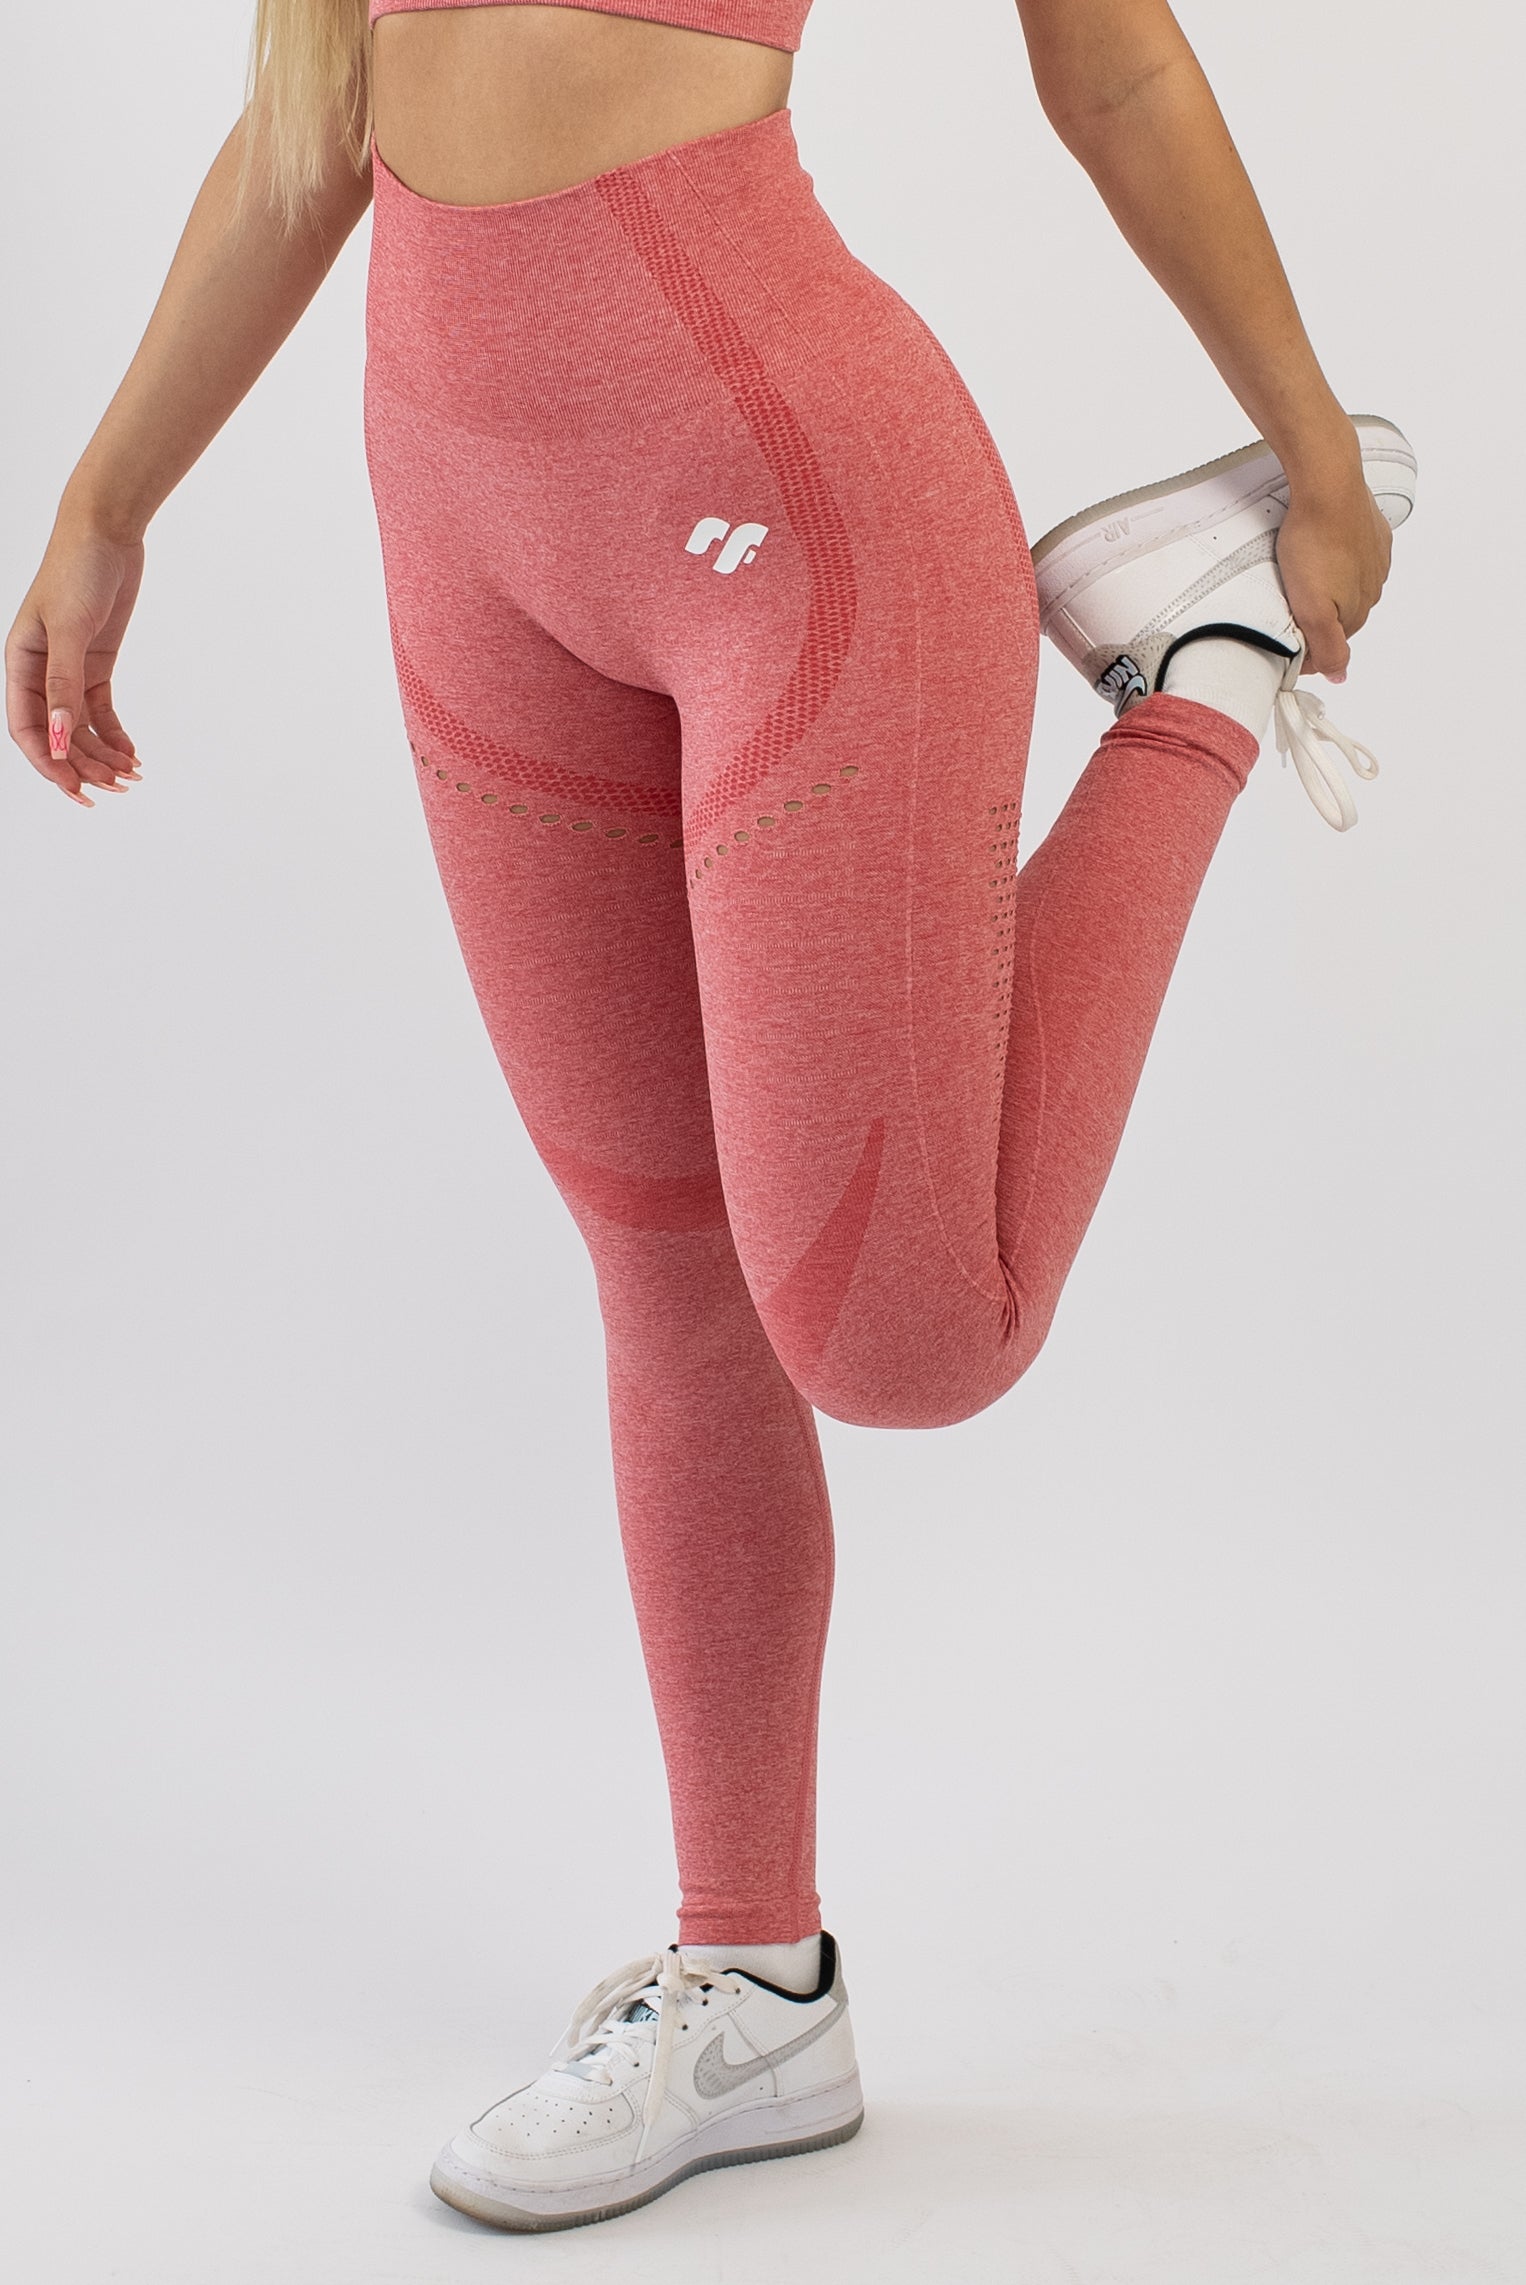 Nike Pro Capri II Women's Compression Tights - Large - Fusion Red